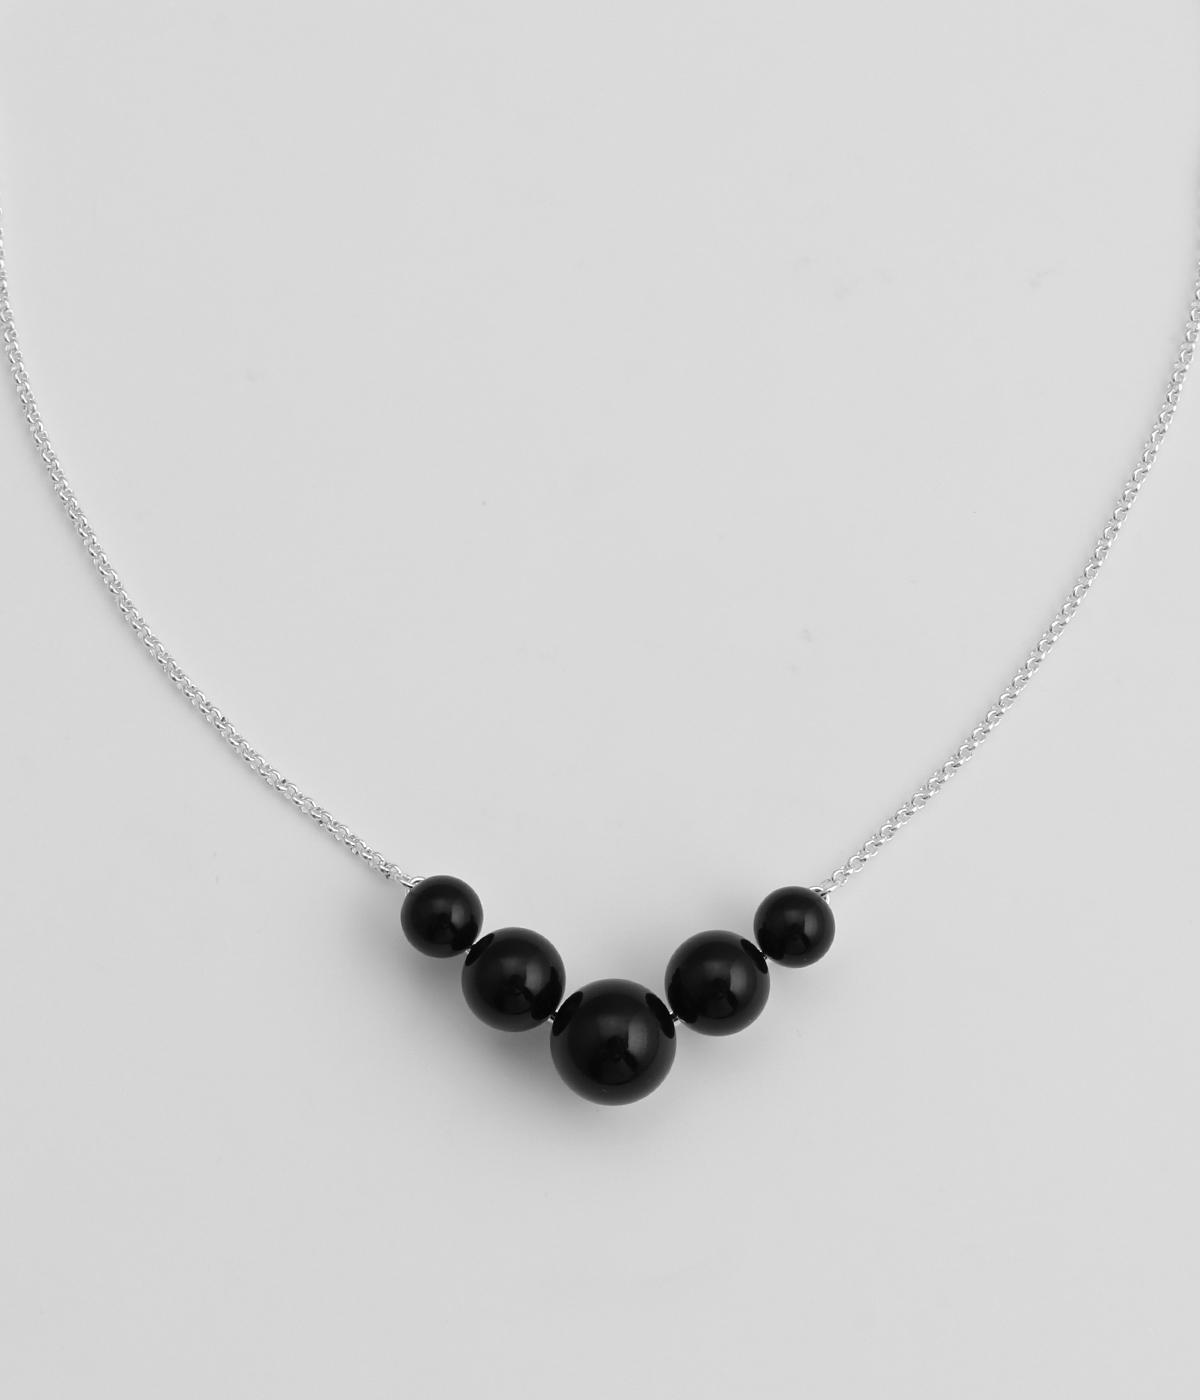 Vania Cadamuro | WHITE & BLACK NECKLACE -latest NECKLACE,Pendant Necklaces design 2021